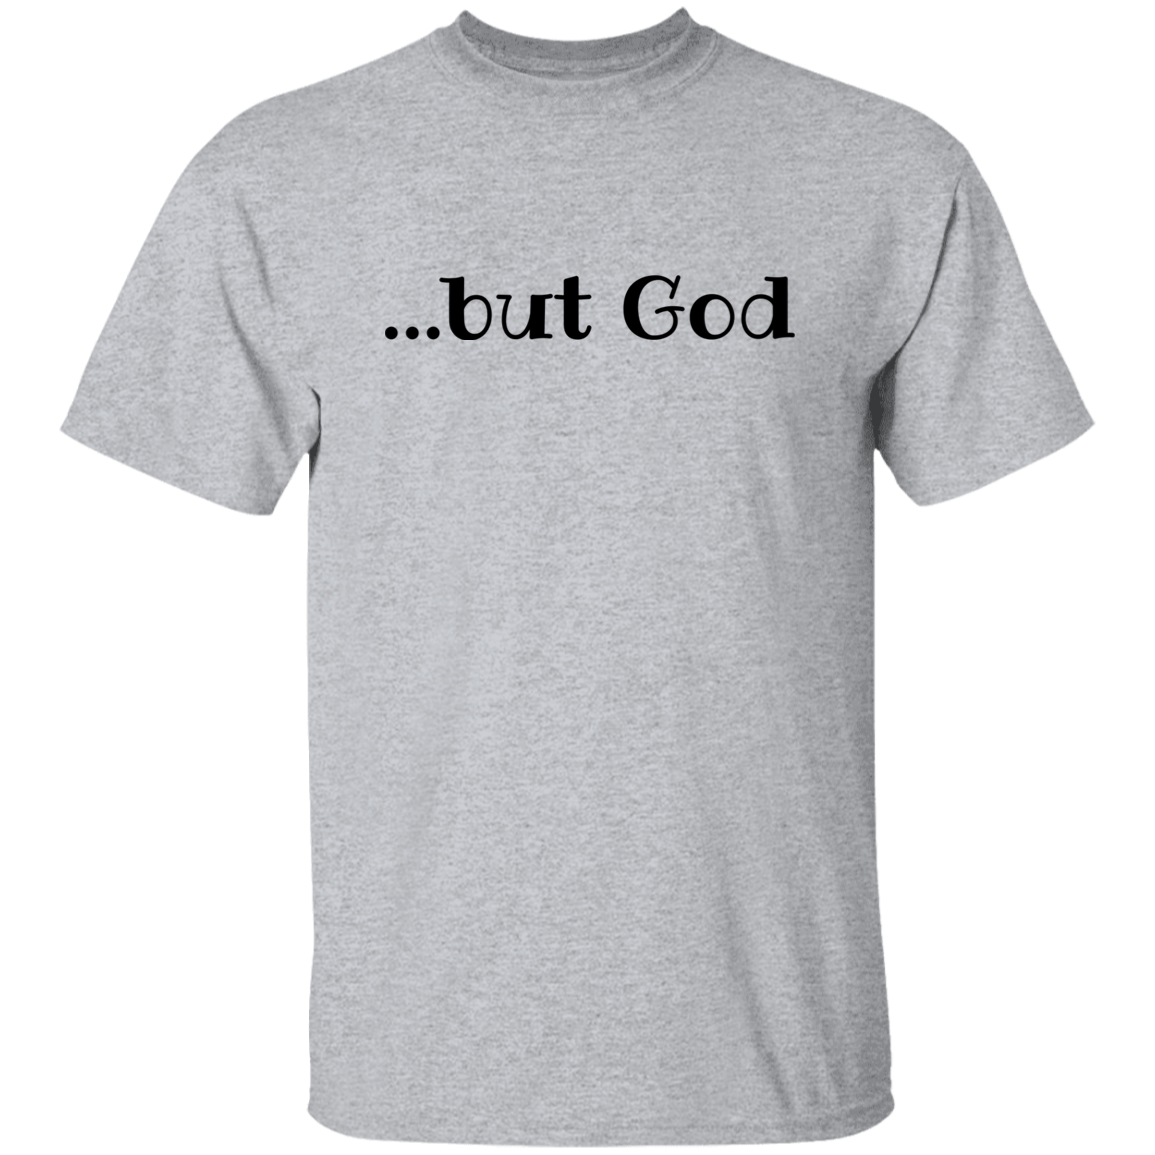 But God 5.3 oz. T-Shirt